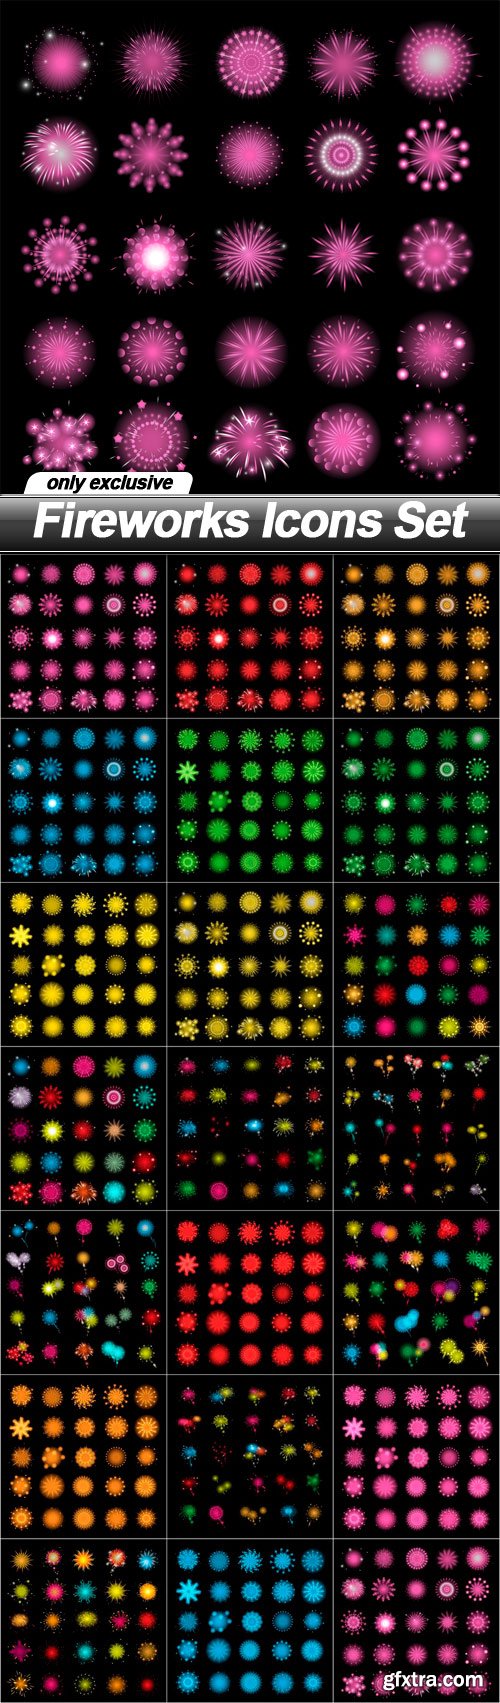 Fireworks Icons Set - 20 EPS